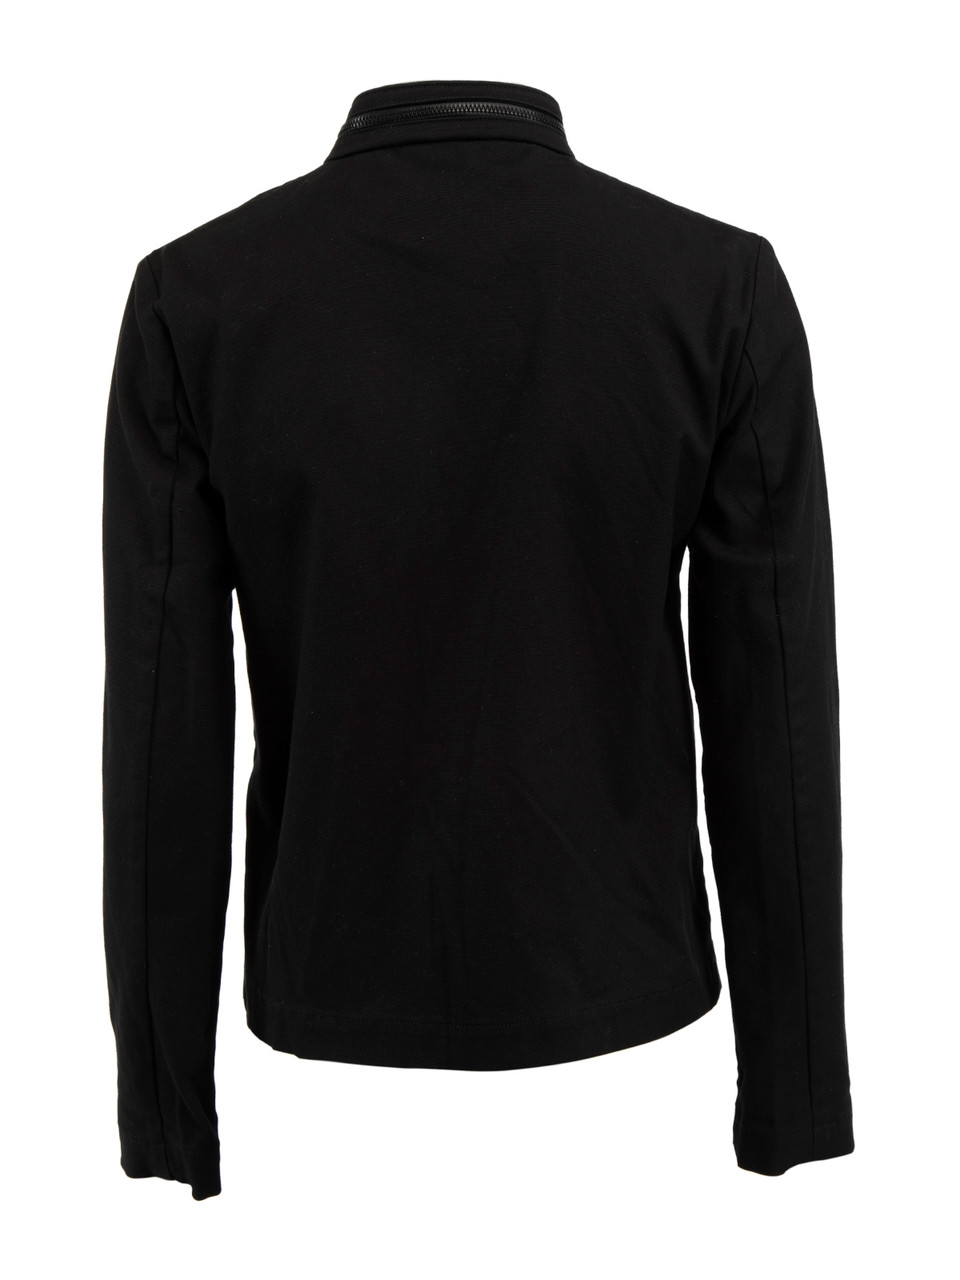 Helmut Lang Thick Cotton Button Up Shirt